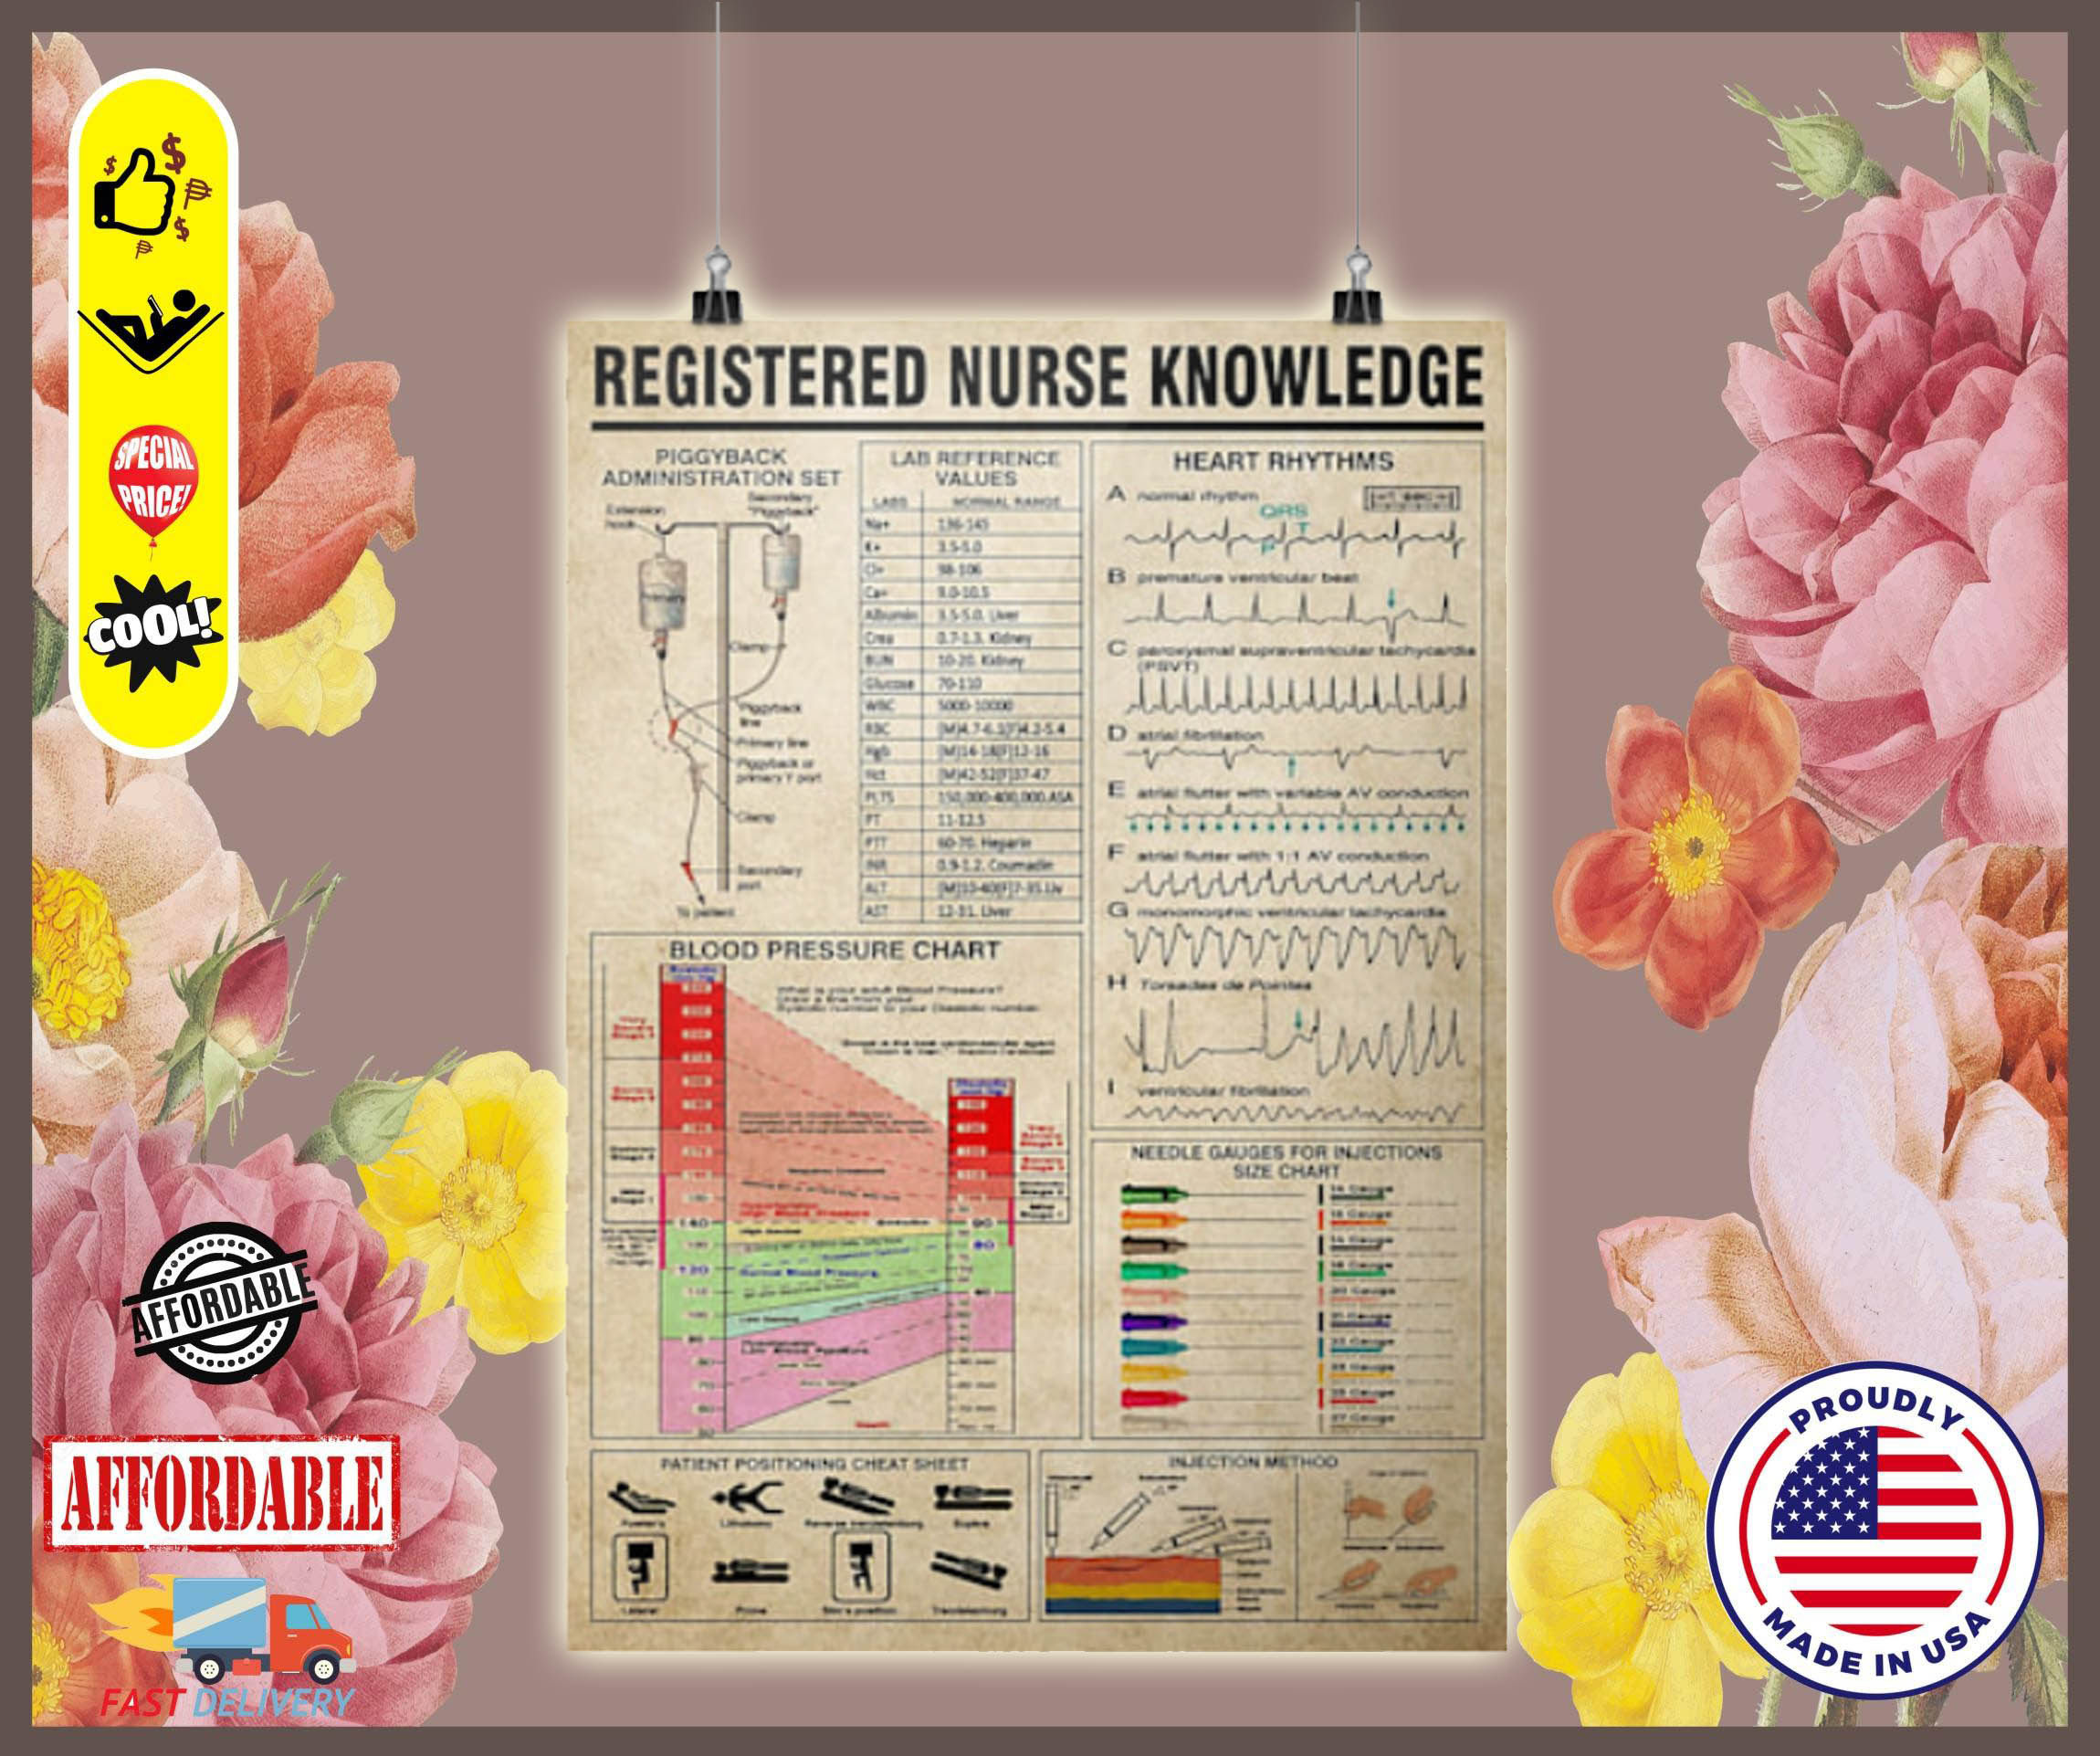 Registered nurse knowledge poster 2